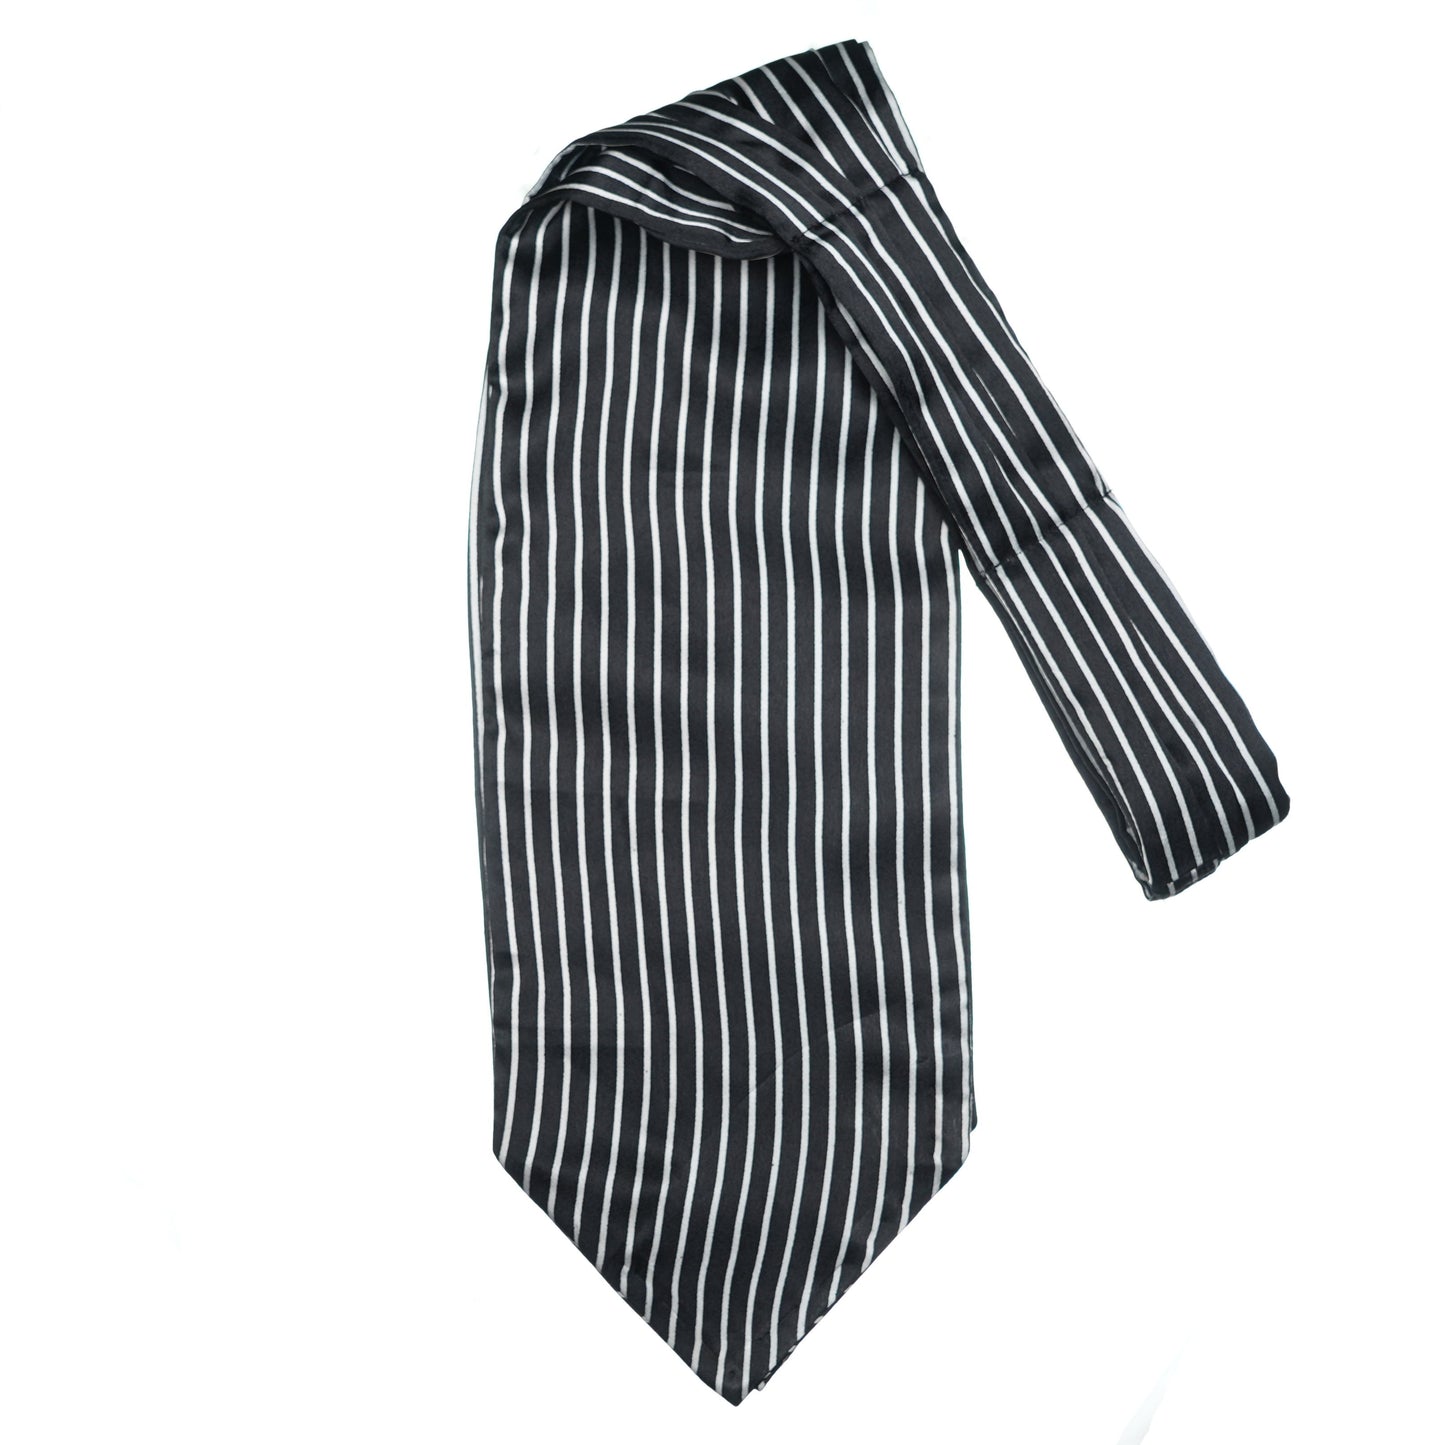 Monochrome Striped Black Cravat